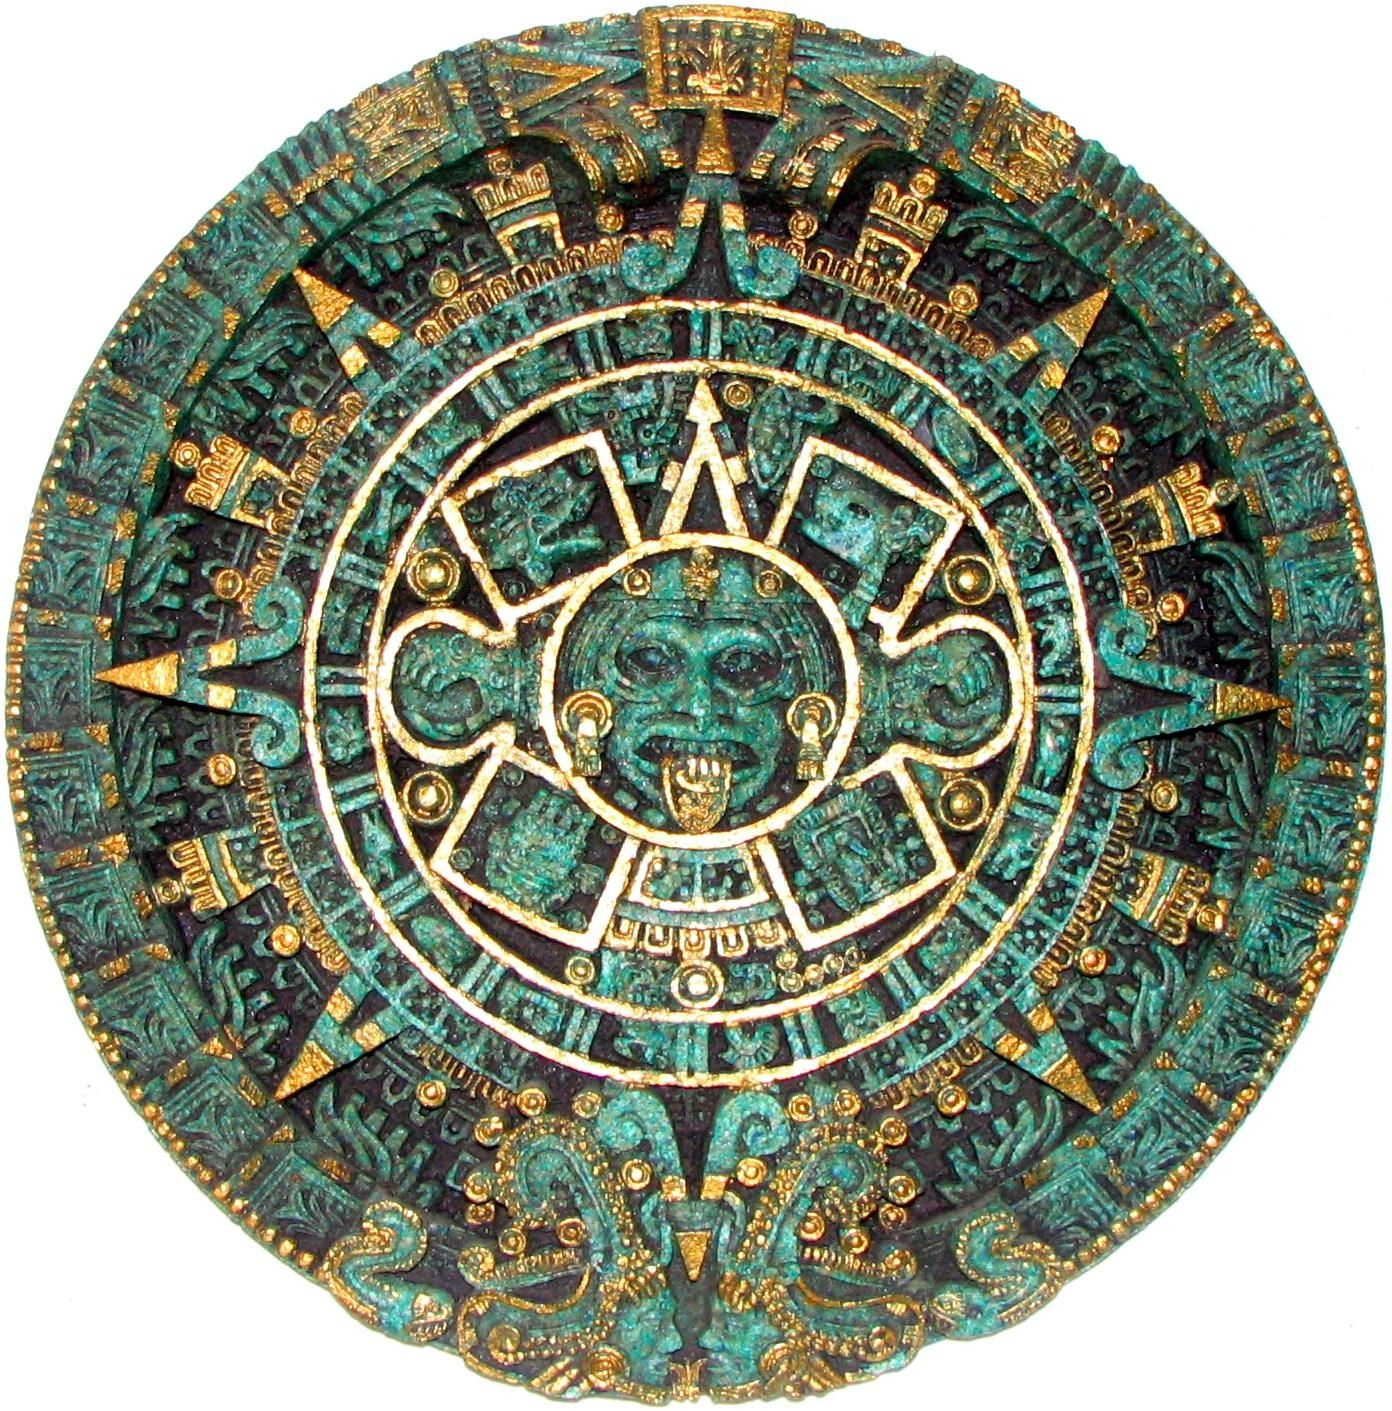 Catch Aztec Calendar Symbols Meaning